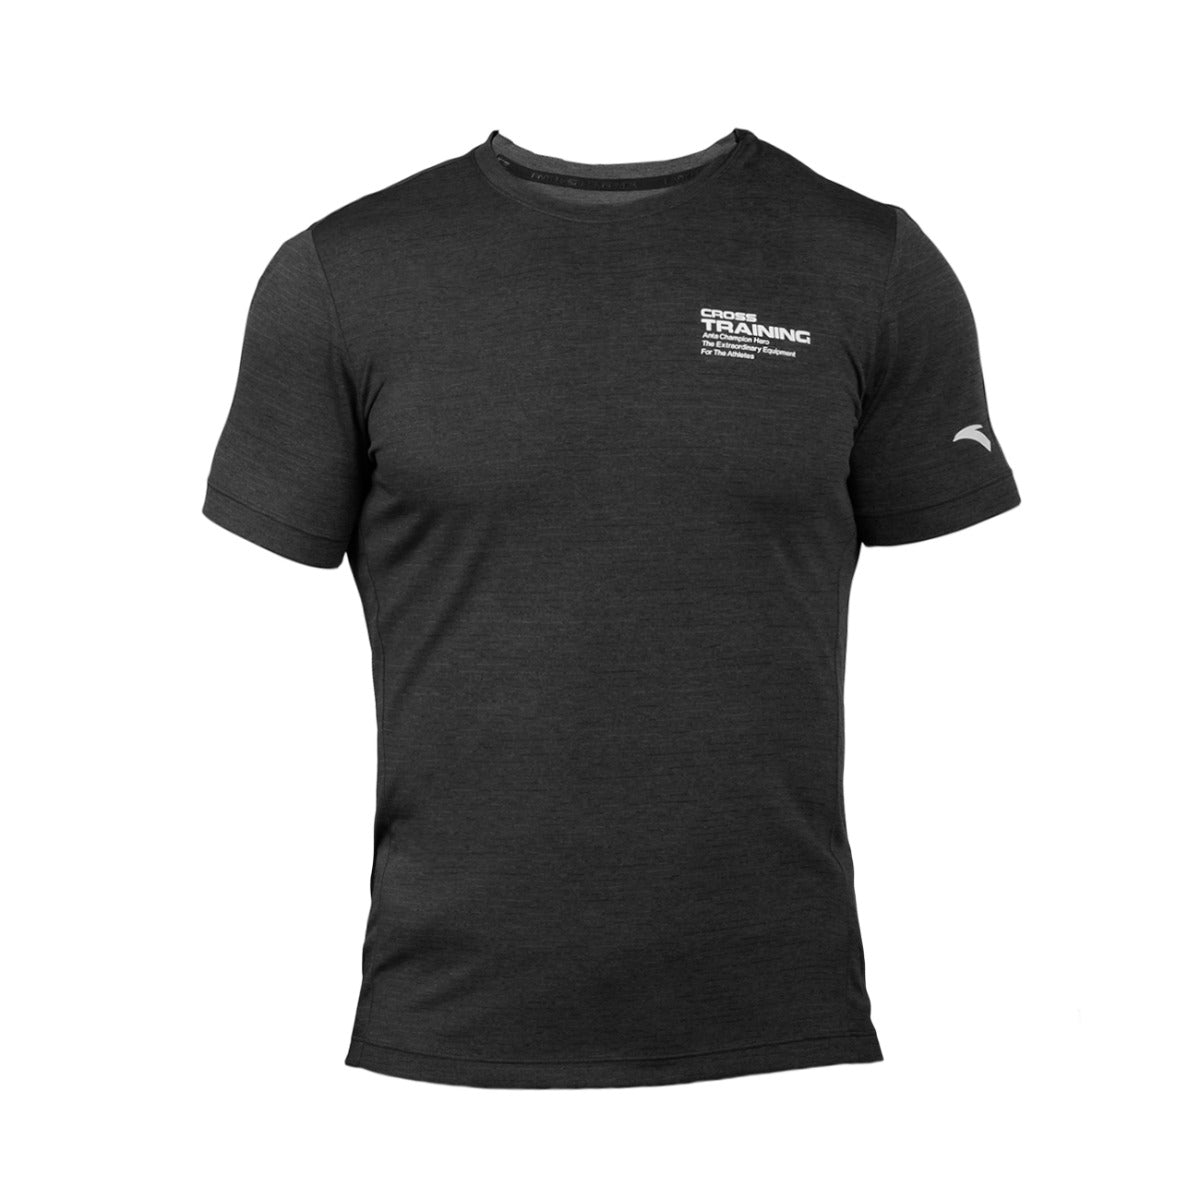 Anta Cross Training T-Shirt For Men, Black & Grey